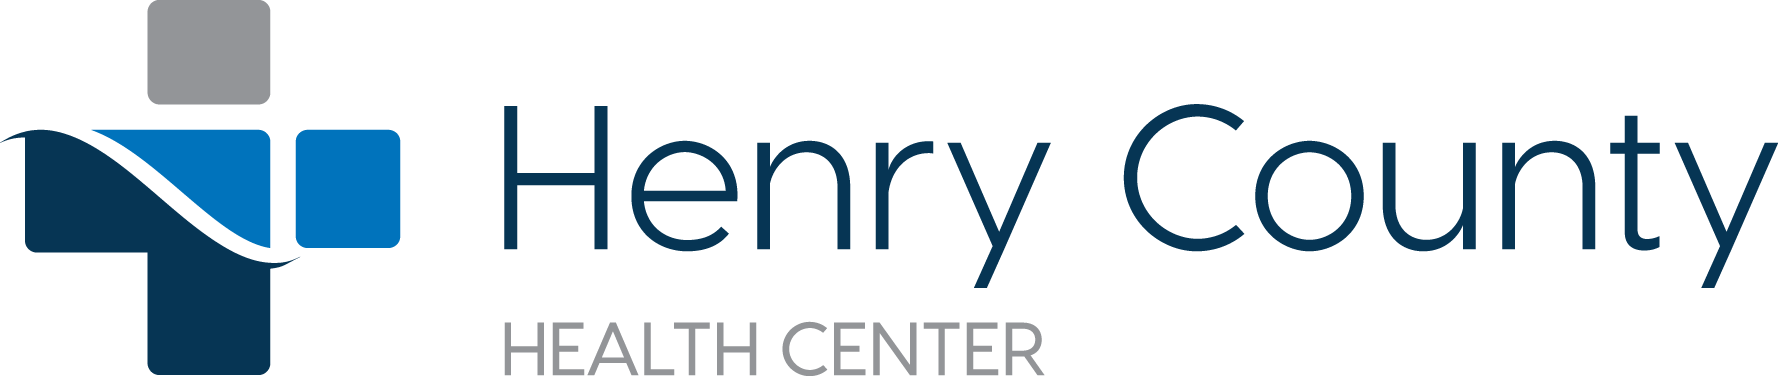 Henry County Health Center Foundation